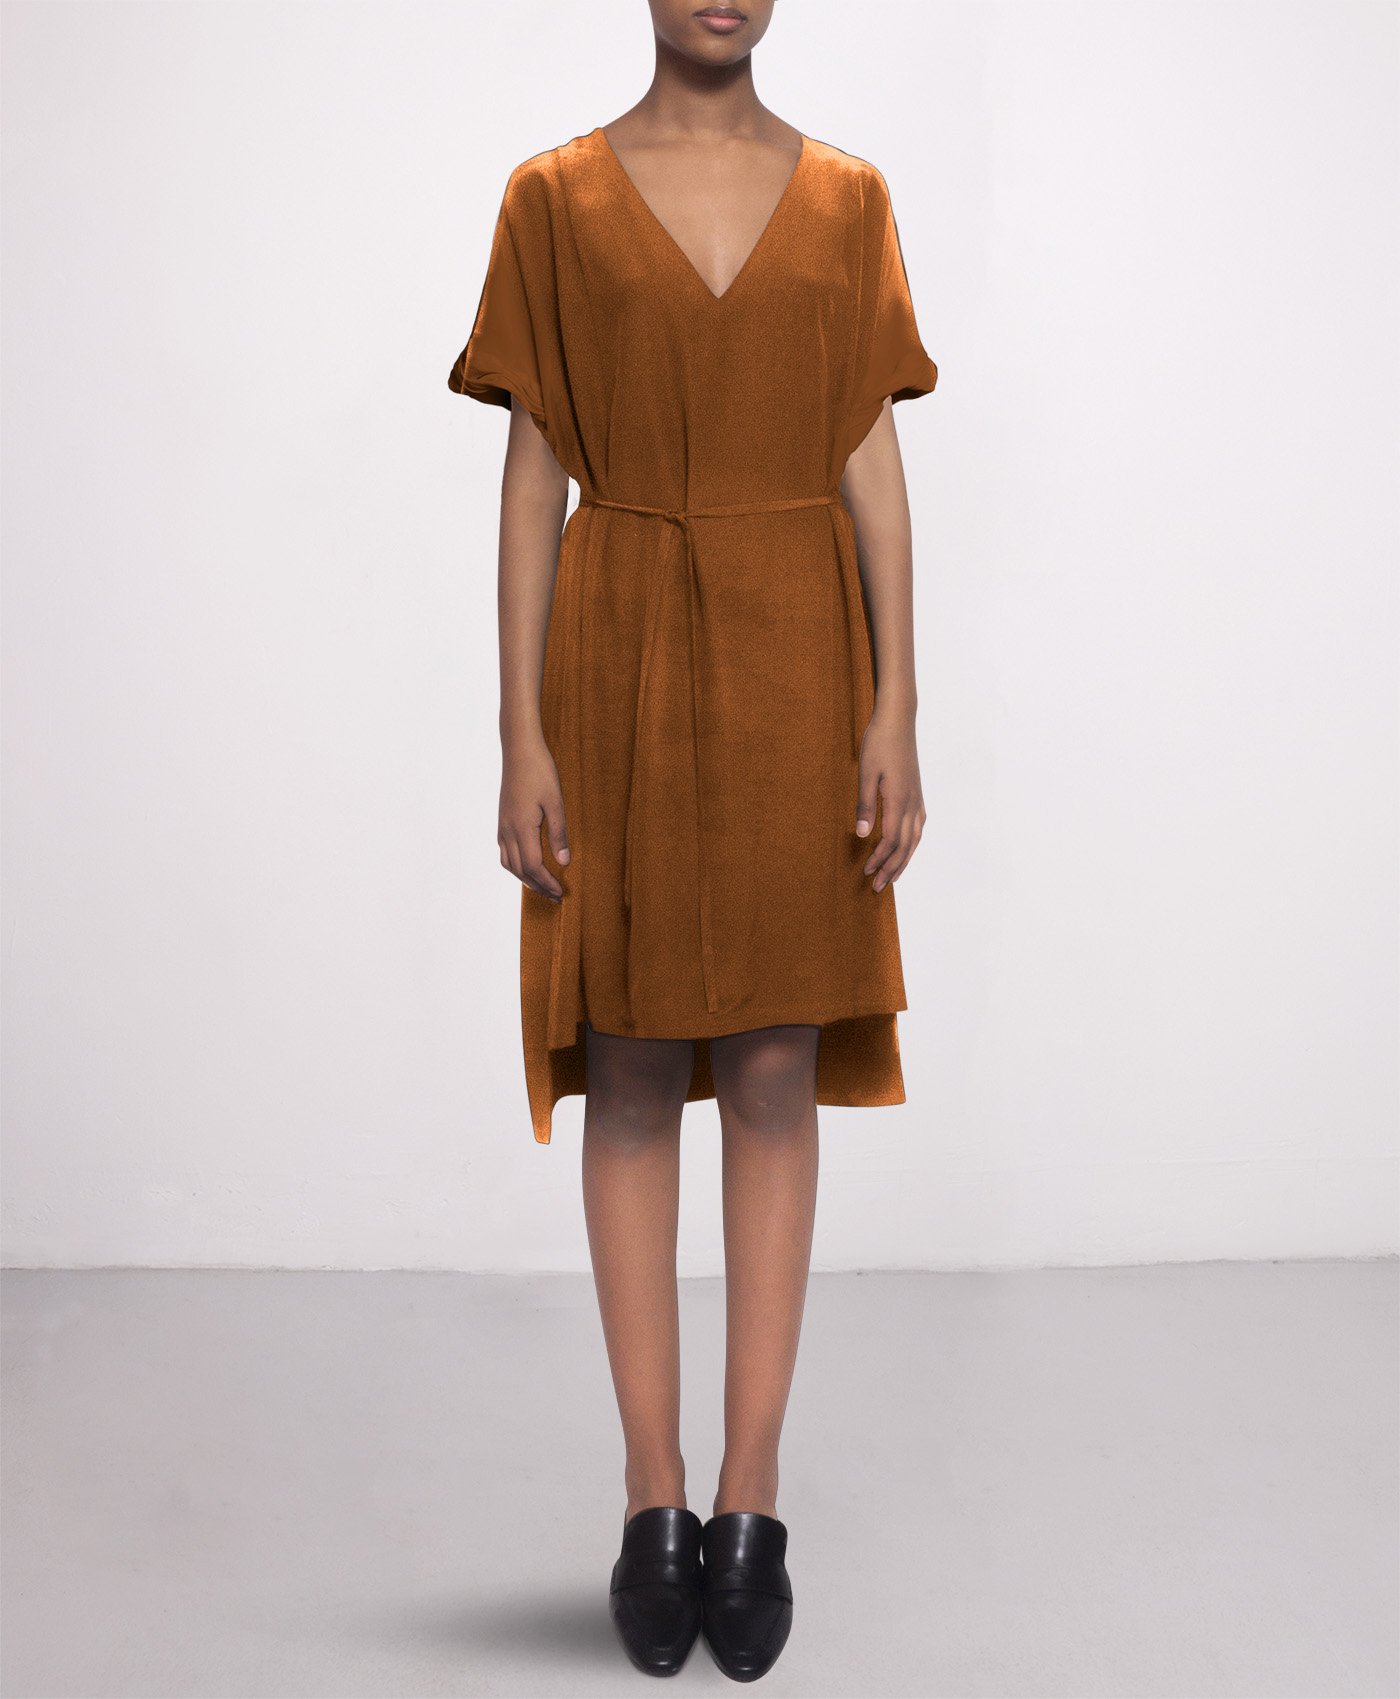 Knee-length day silk dress in Cashew Cognac SL VN - Studio Heijne